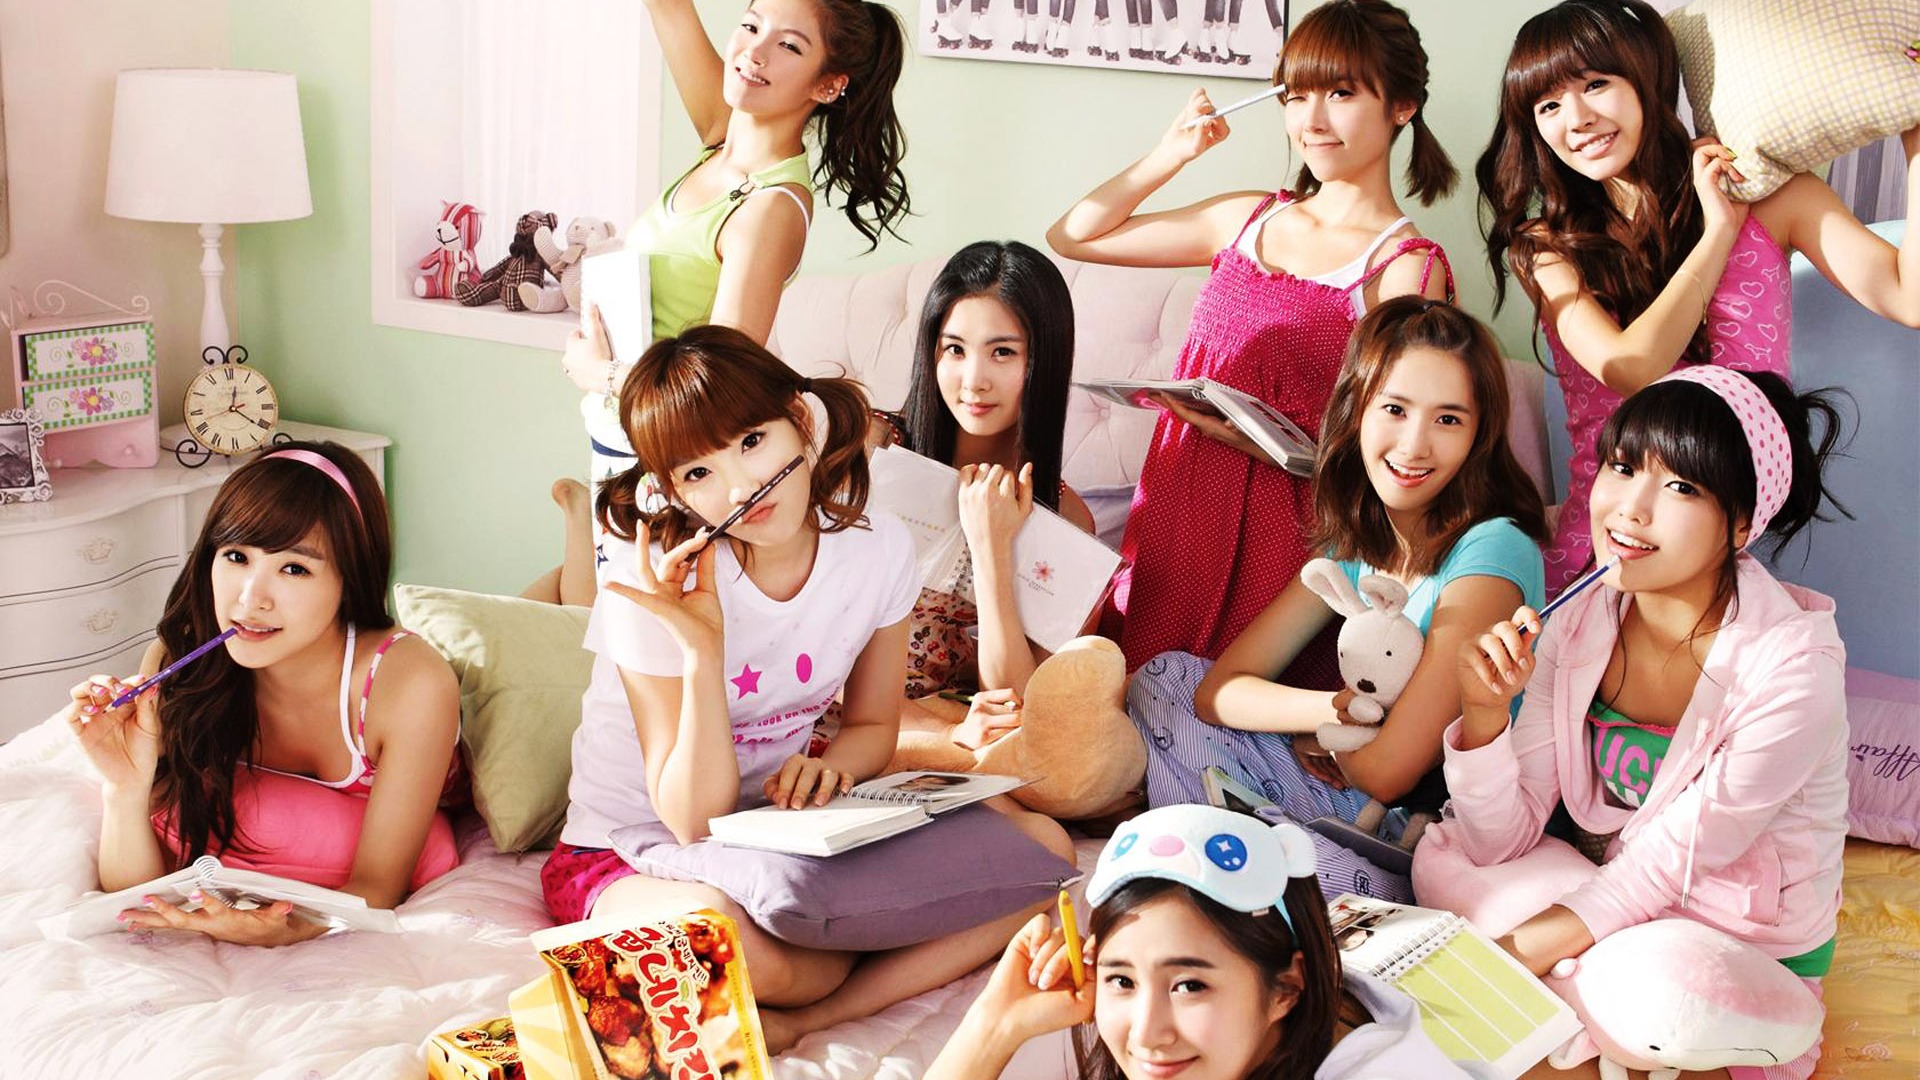 Girls Generation Wallpaper 2 1 19x1080 Wallpaper Download Girls Generation Wallpaper 2 People Wallpapers V3 Wallpaper Site